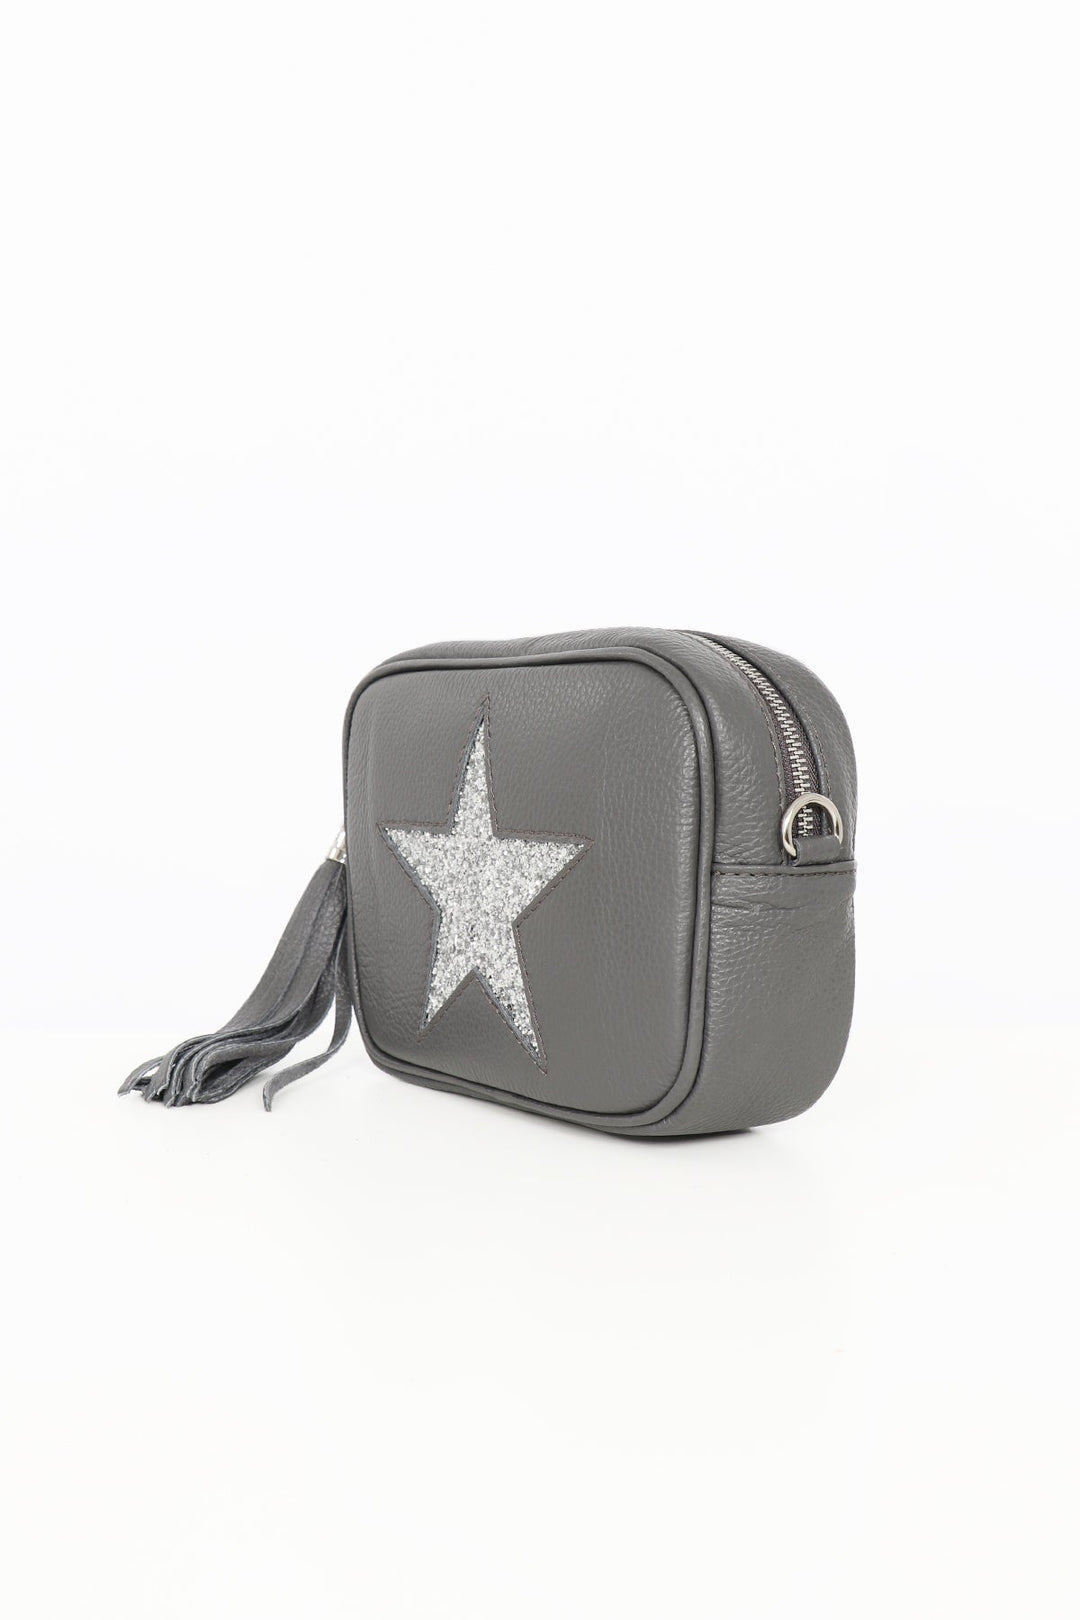 Dark Grey Sliver Glitter Genuine Italian Leather Star Detail Camera Bag With Silver Hardware